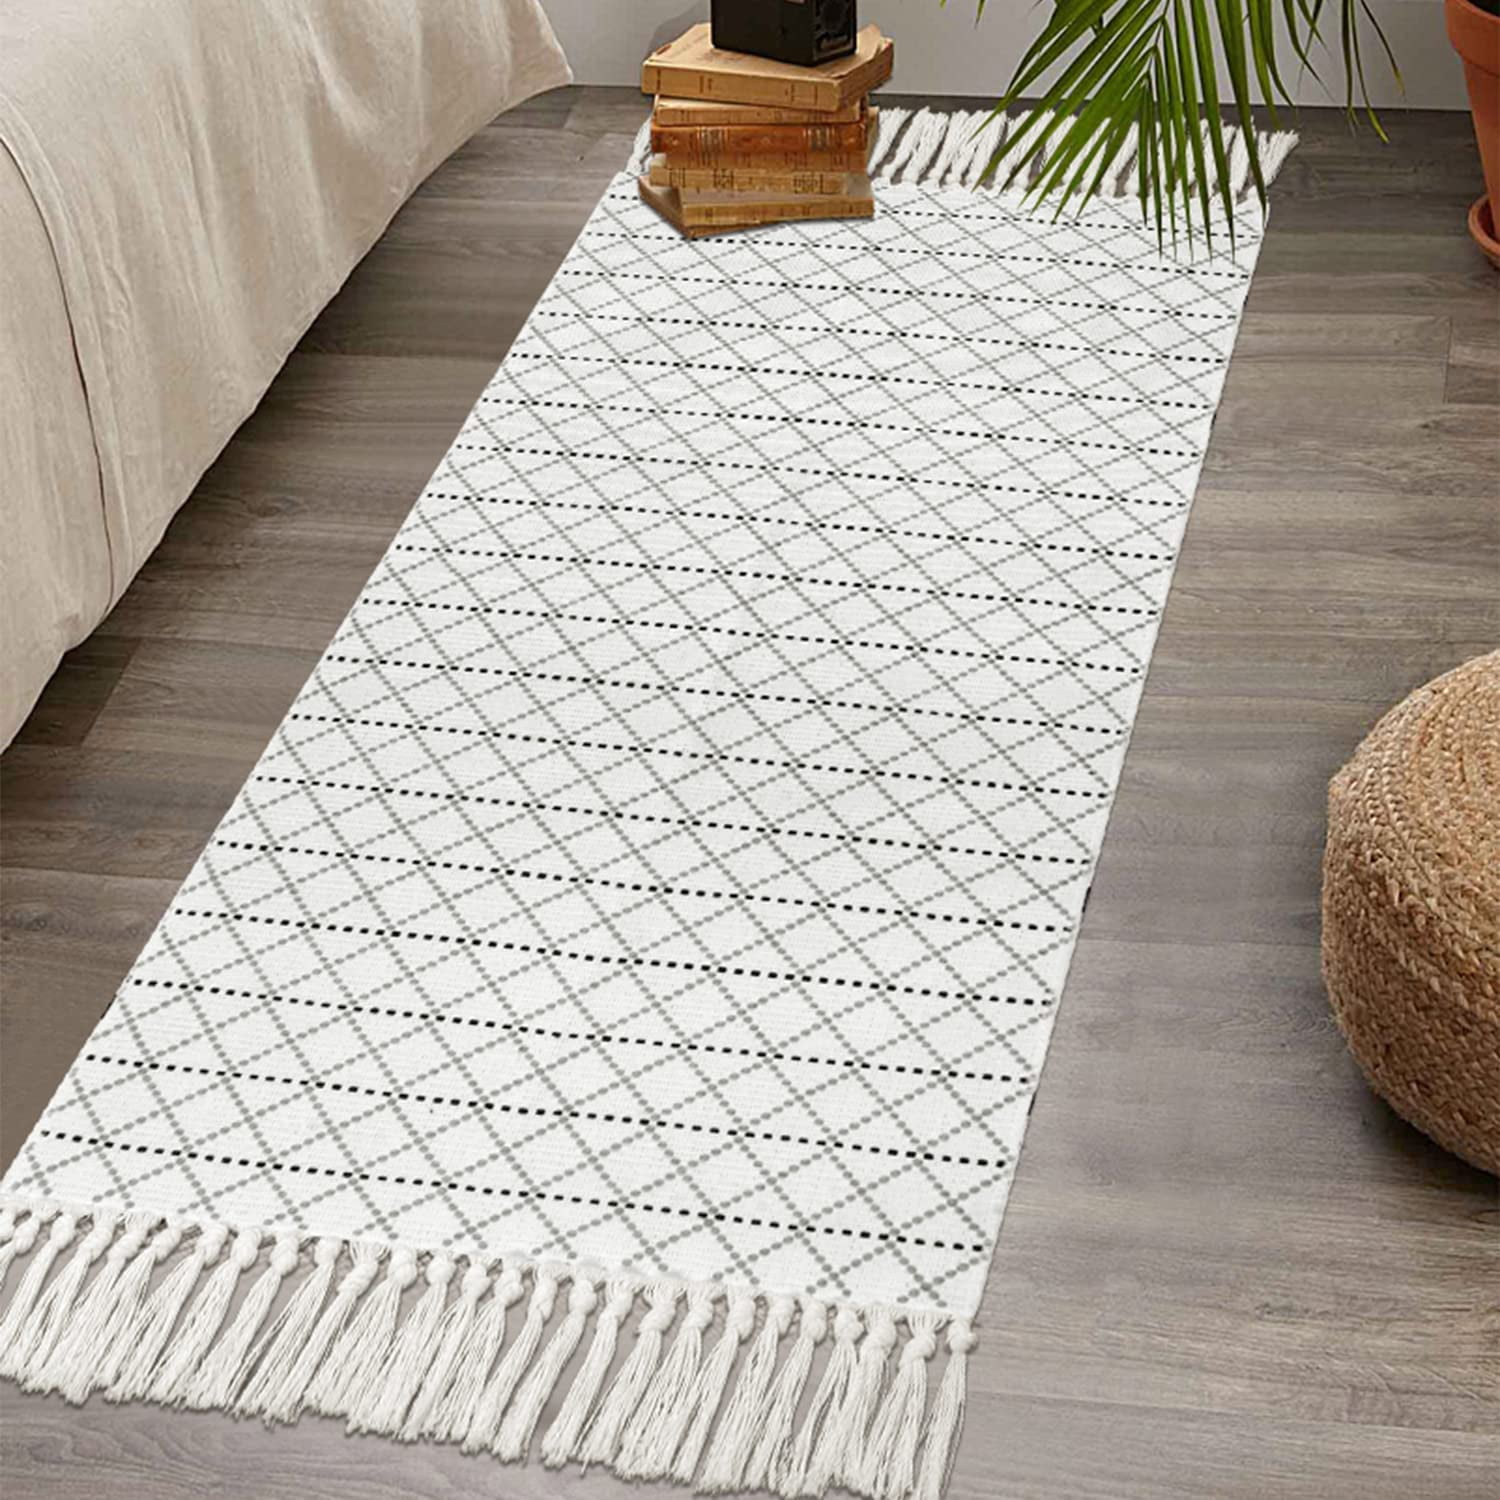 Brand New Morroccan BoHo area rug long rug  with tassels runner cute animal carpet kids baby room area rug decor Bohemian  bathroom  mat